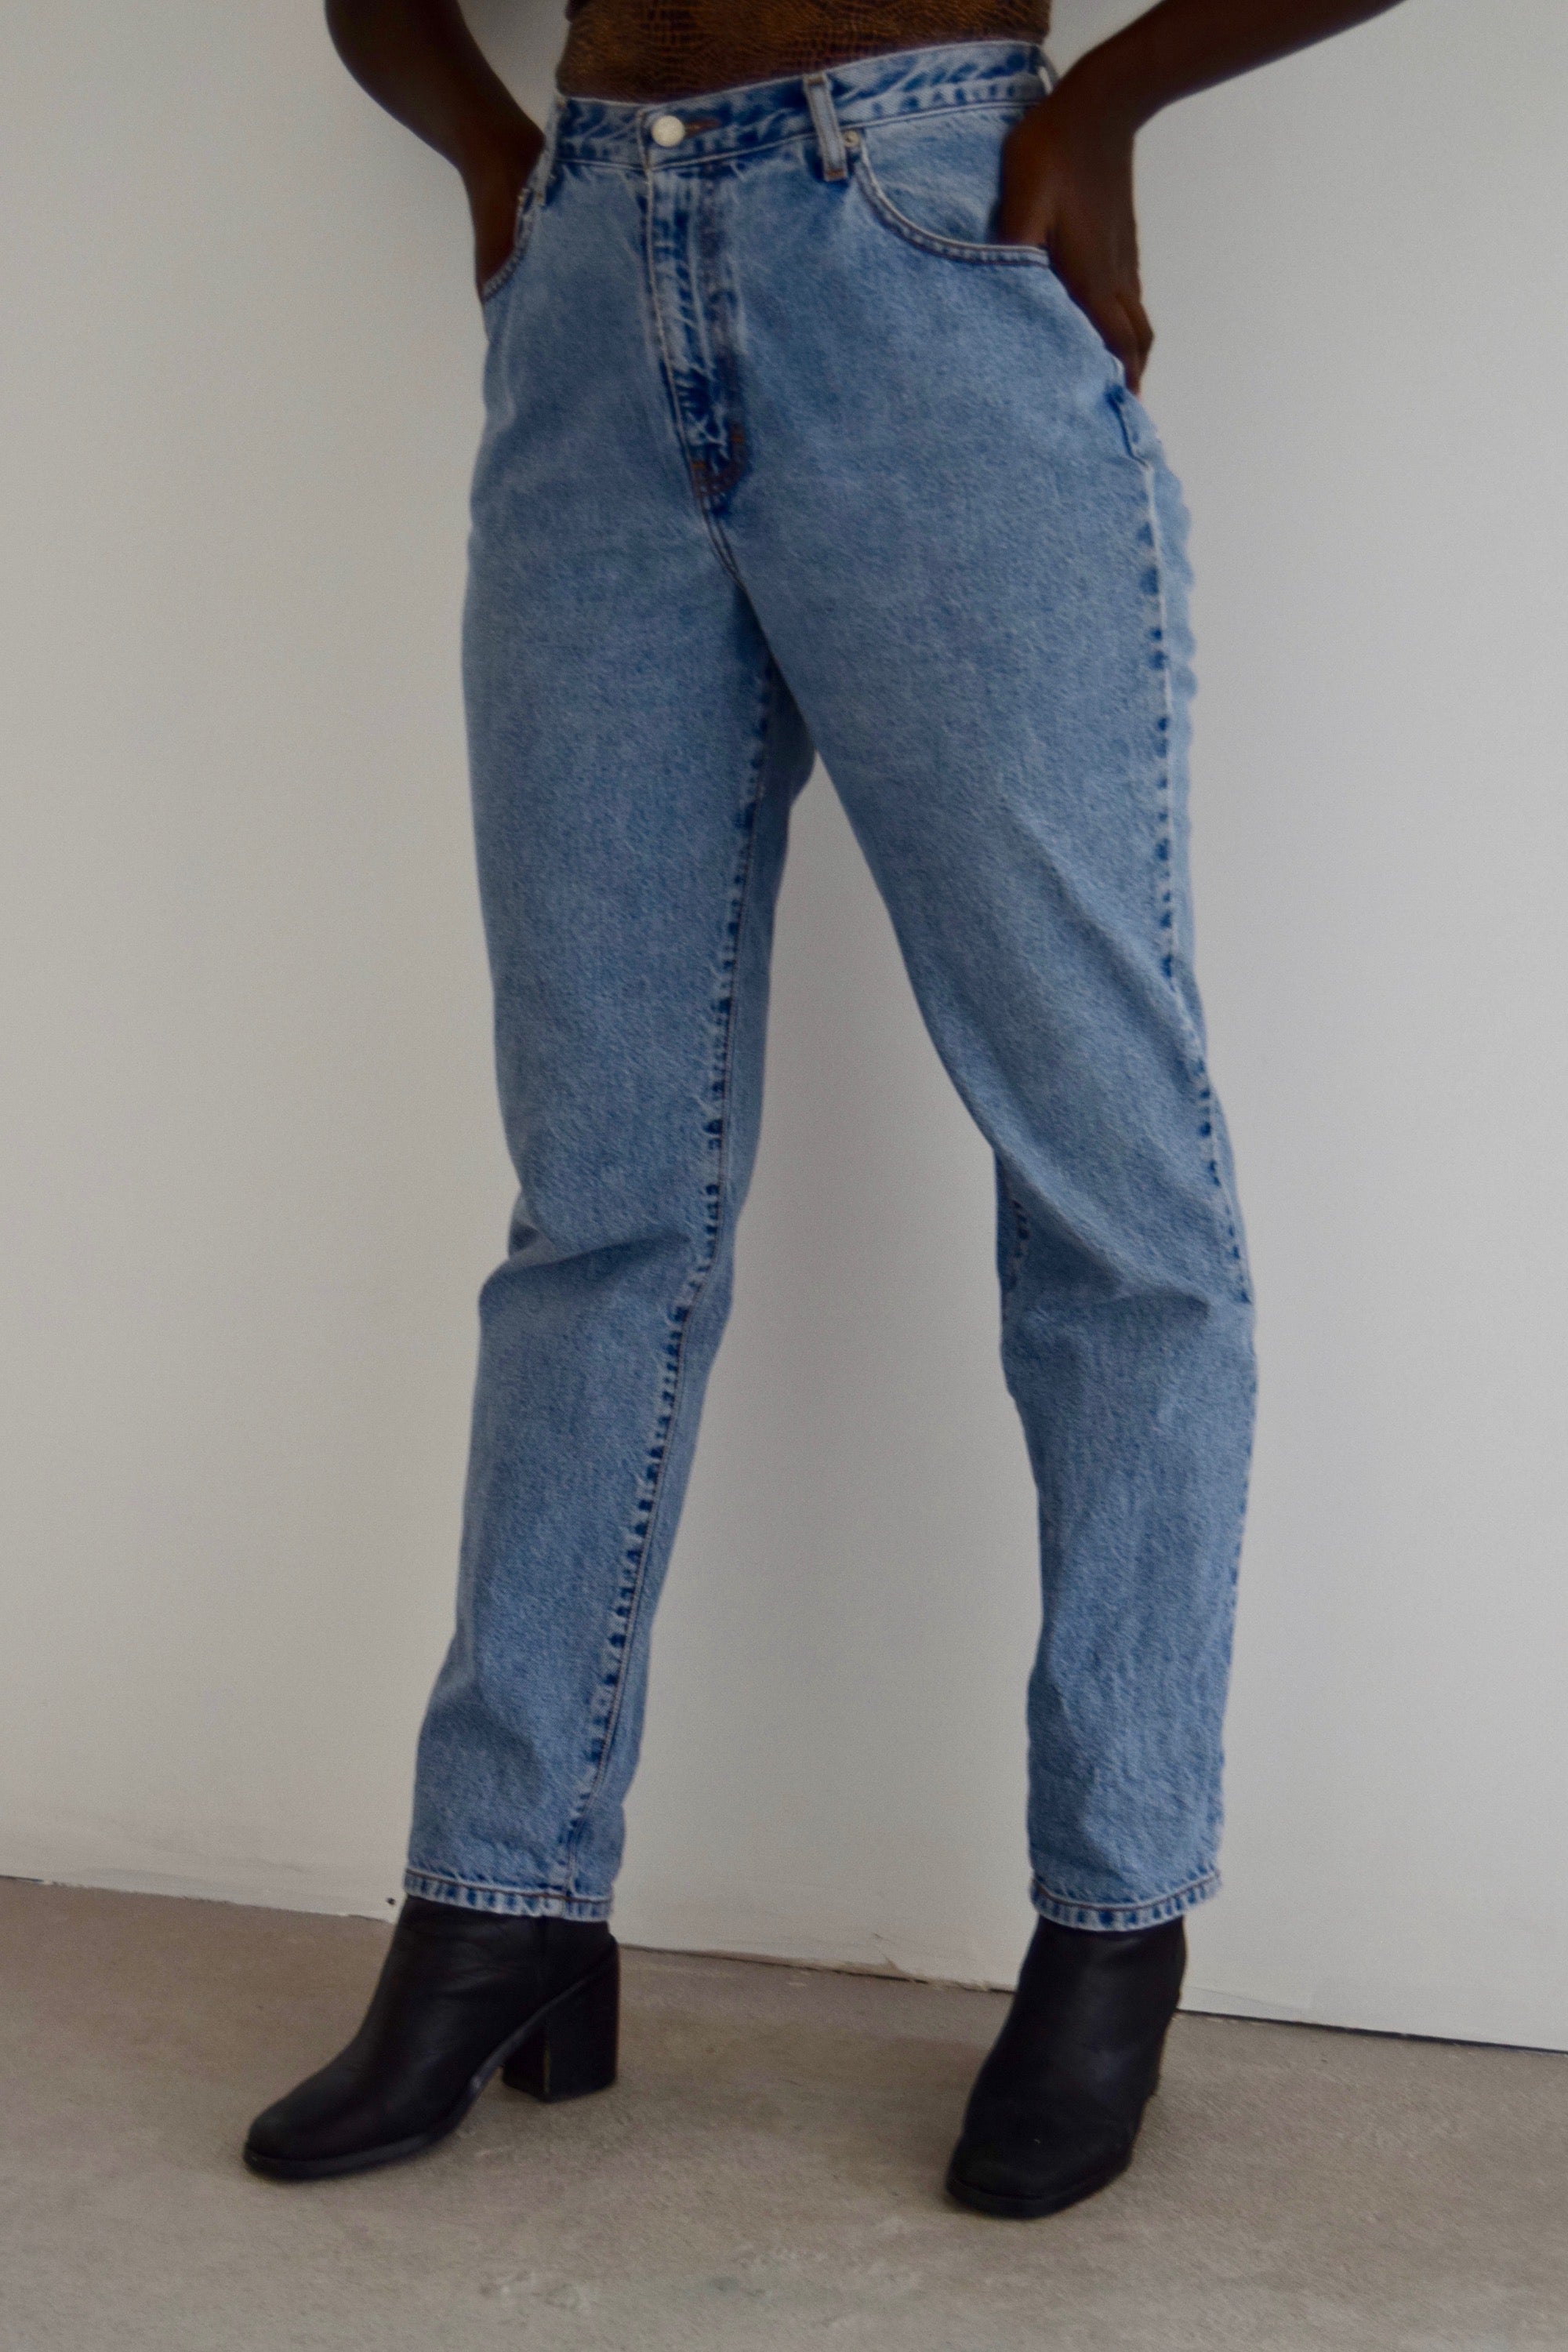 Classic Calvin Klein Jeans